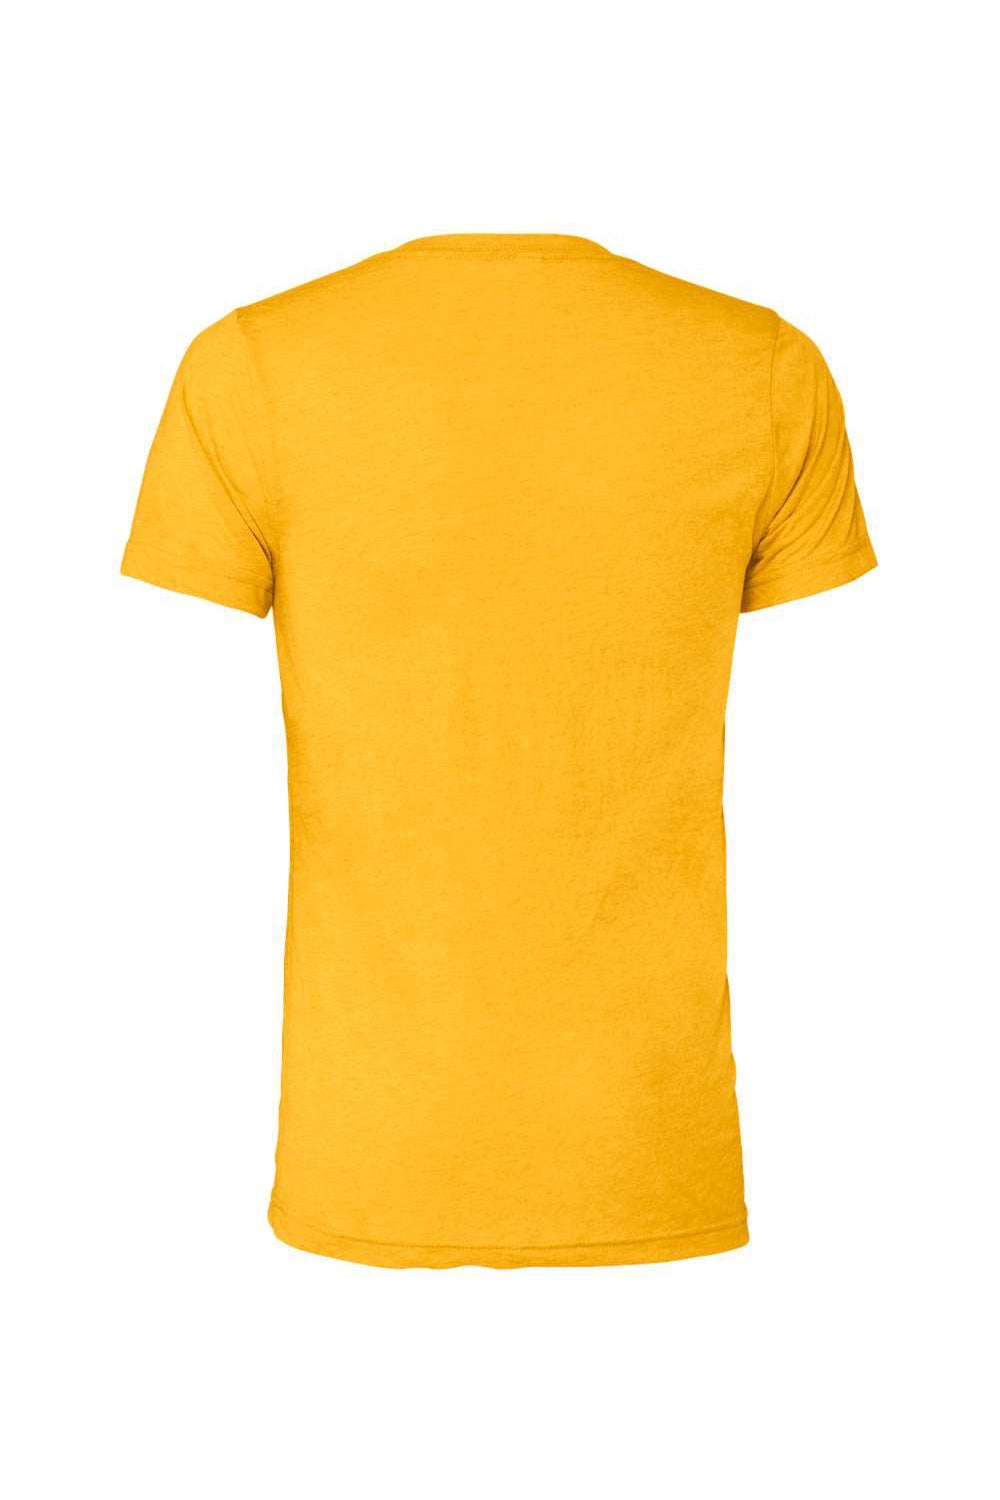 Bella + Canvas BC3413/3413C/3413 Mens Short Sleeve Crewneck T-Shirt Yellow Gold Flat Back